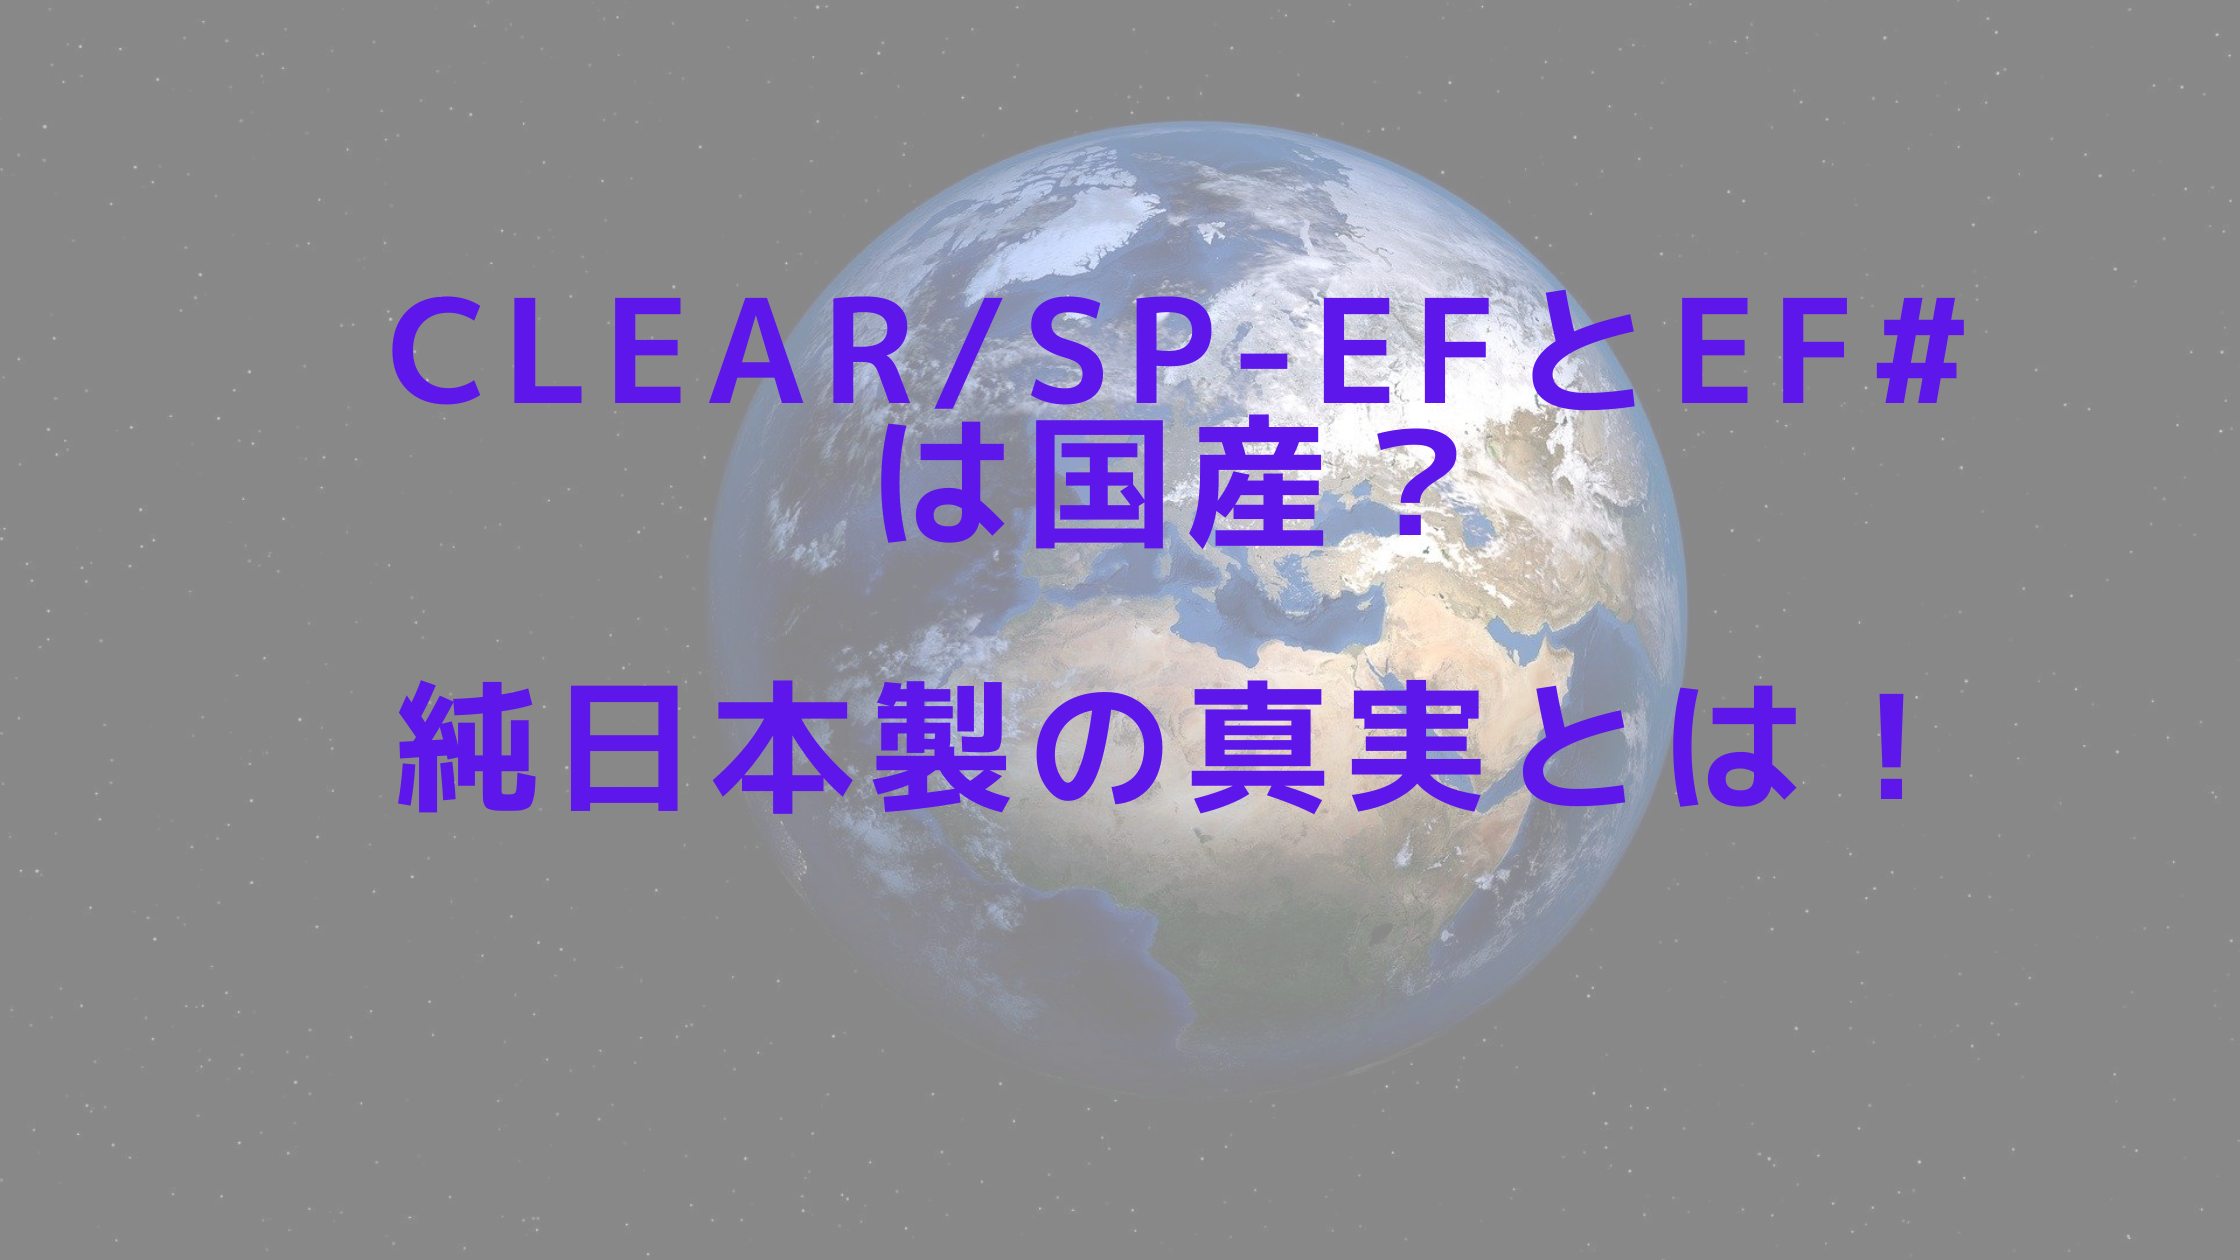 CLEAR/SP-efとef#は国産？純日本製の真実とは！